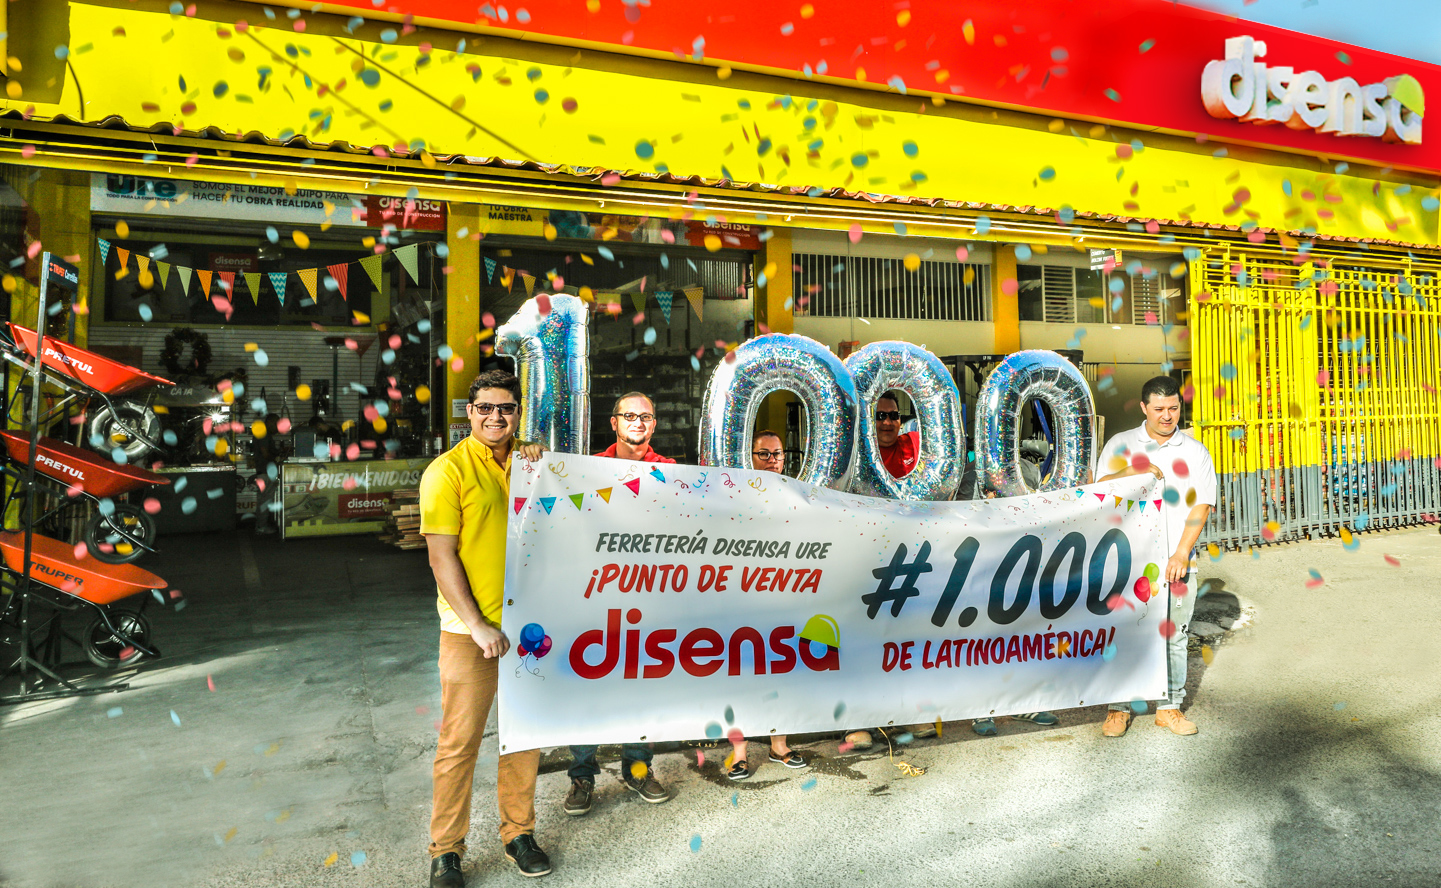 LafargeHolcim abre la ferretería número 1.000 de Disensa en Latinoamérica